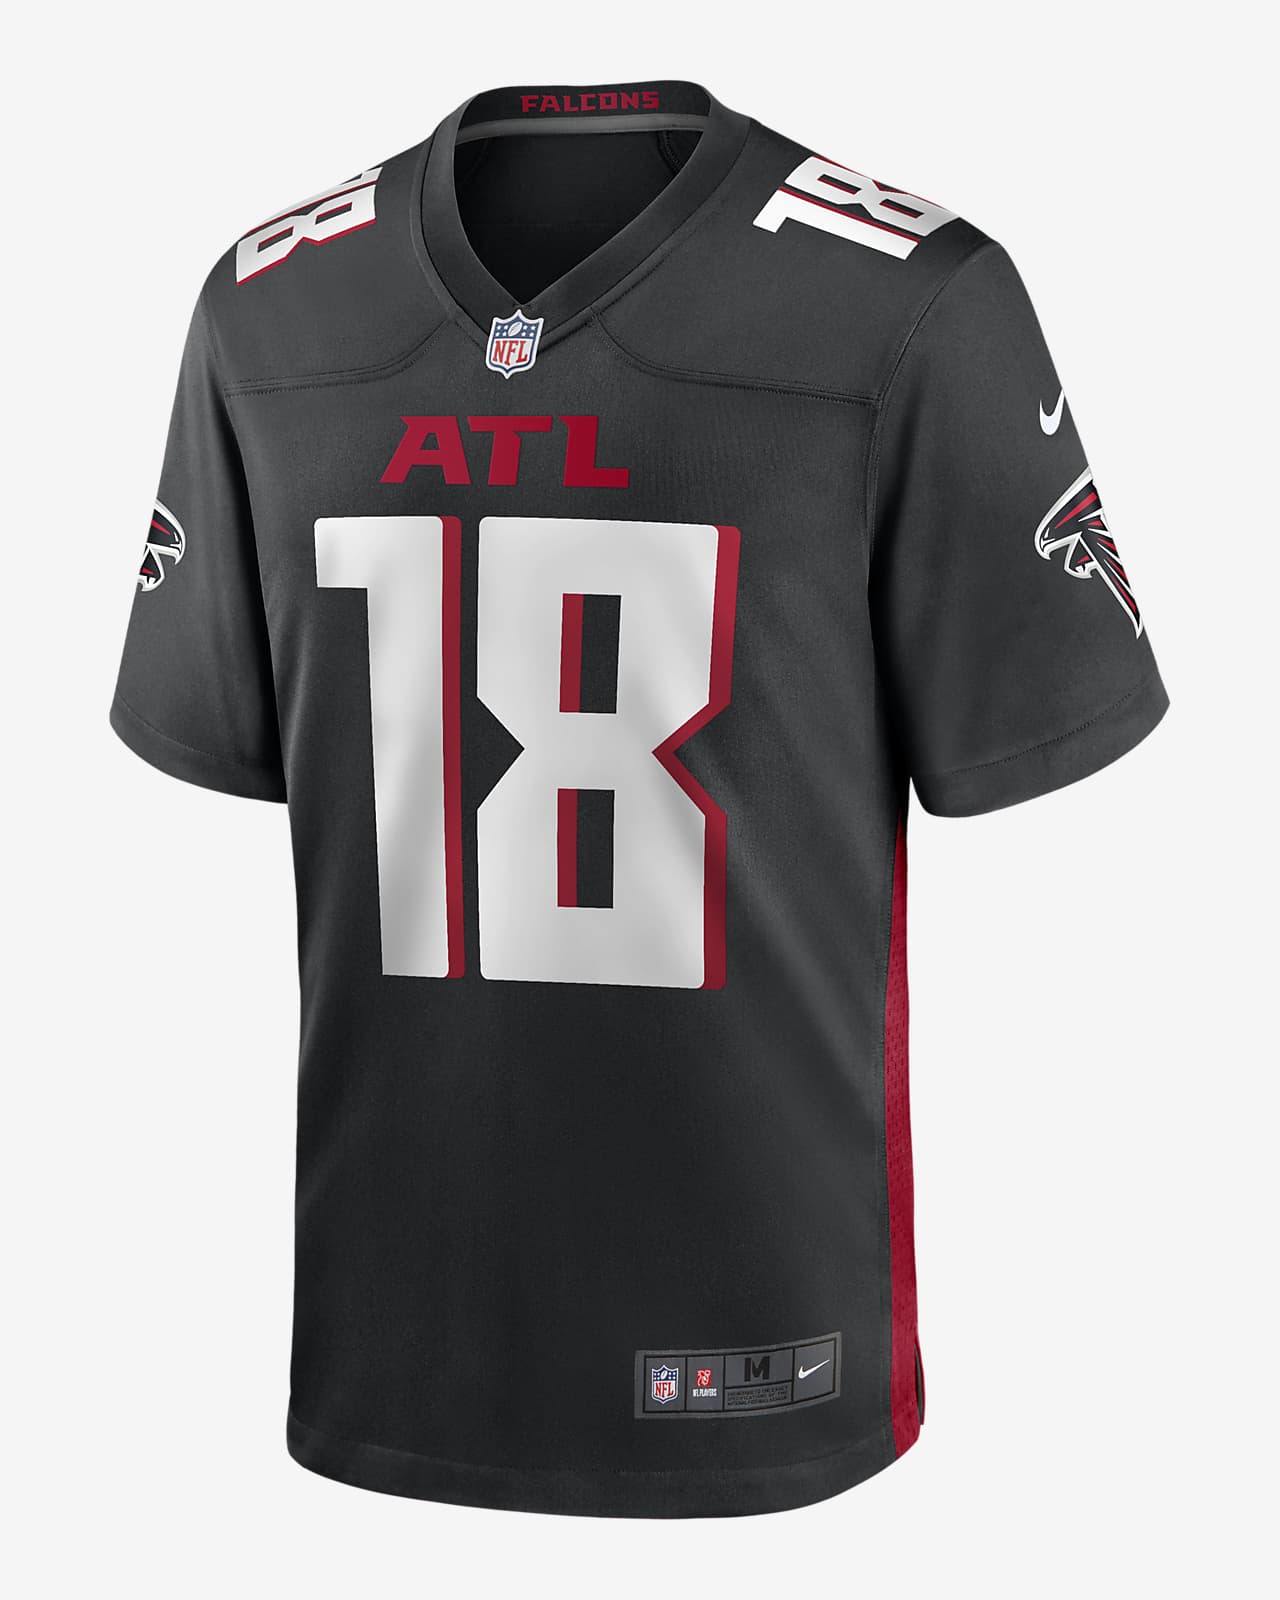 Kirk Cousins Atlanta Falcons Men's Nike NFL Game Football Jersey